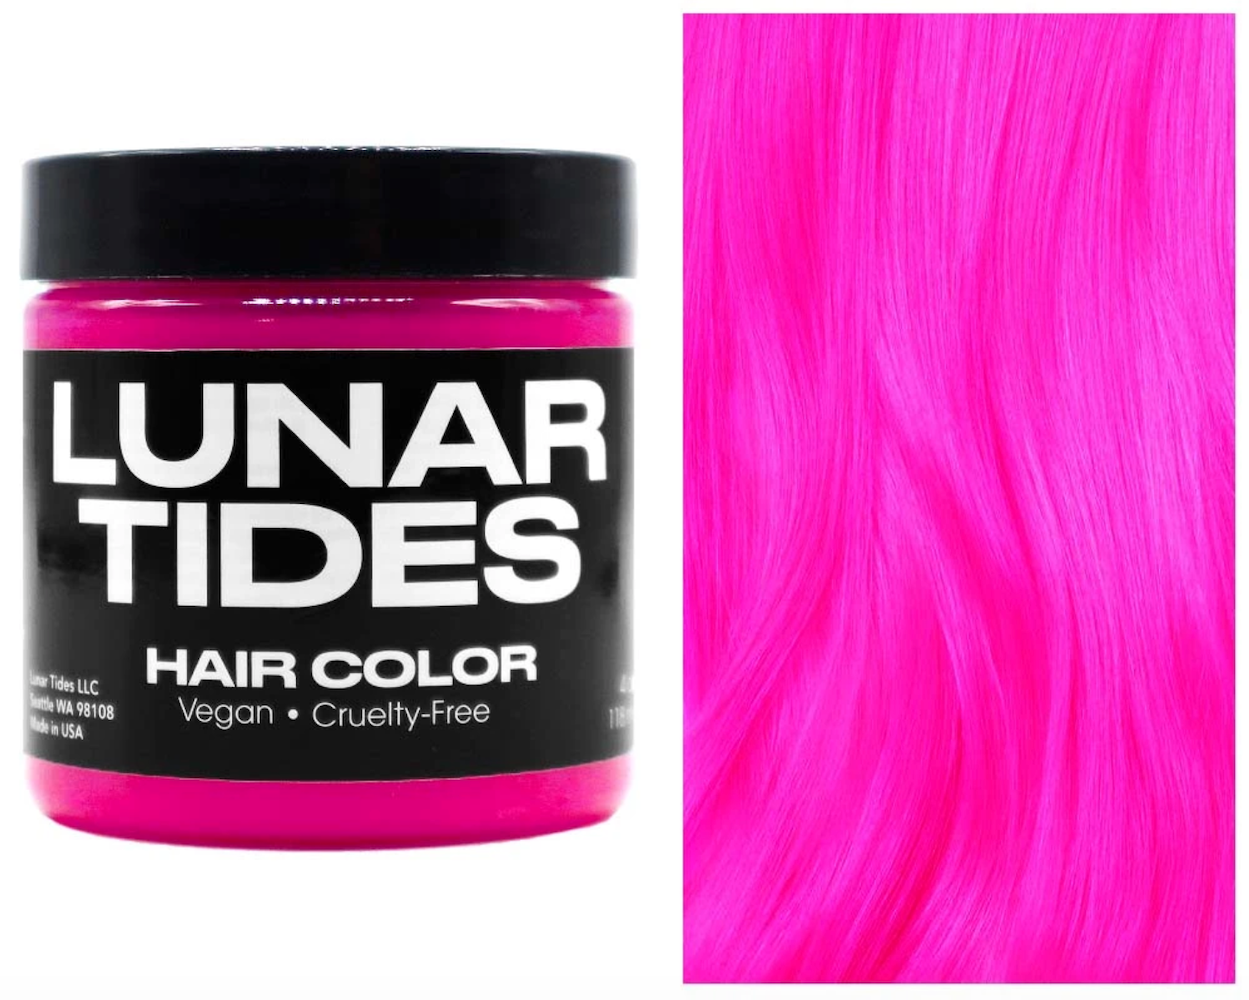 Lunar Tides Hair Dye - Neon Dragonfruit, a neon pink jar of hair dye. Example of pink hair.